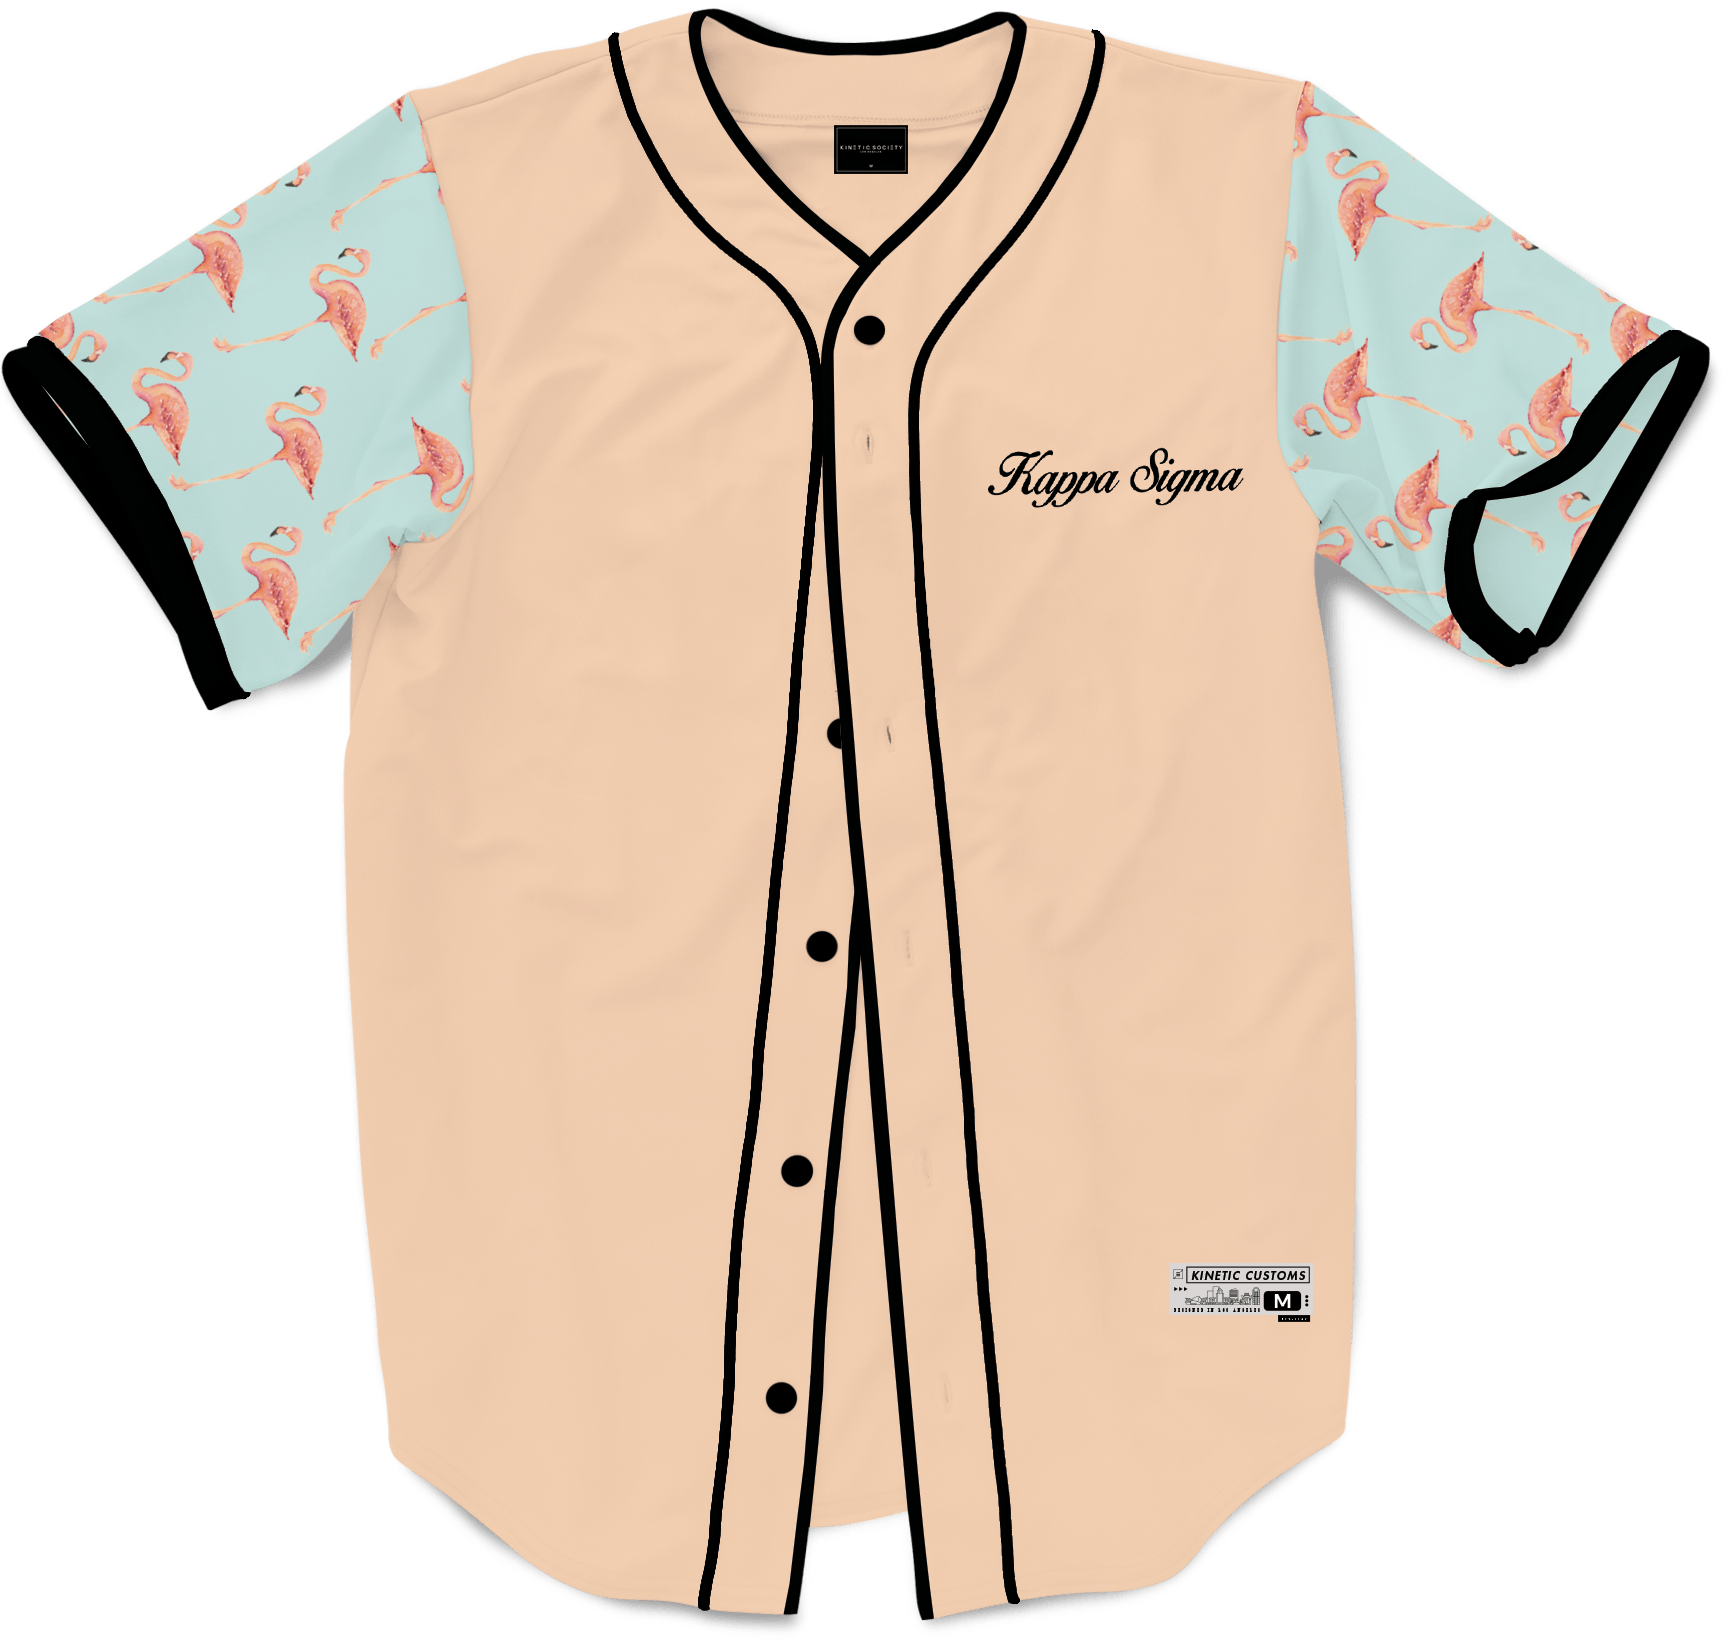 Kappa Sigma - Flamingo Fam Baseball Jersey Premium Baseball Kinetic Society LLC 